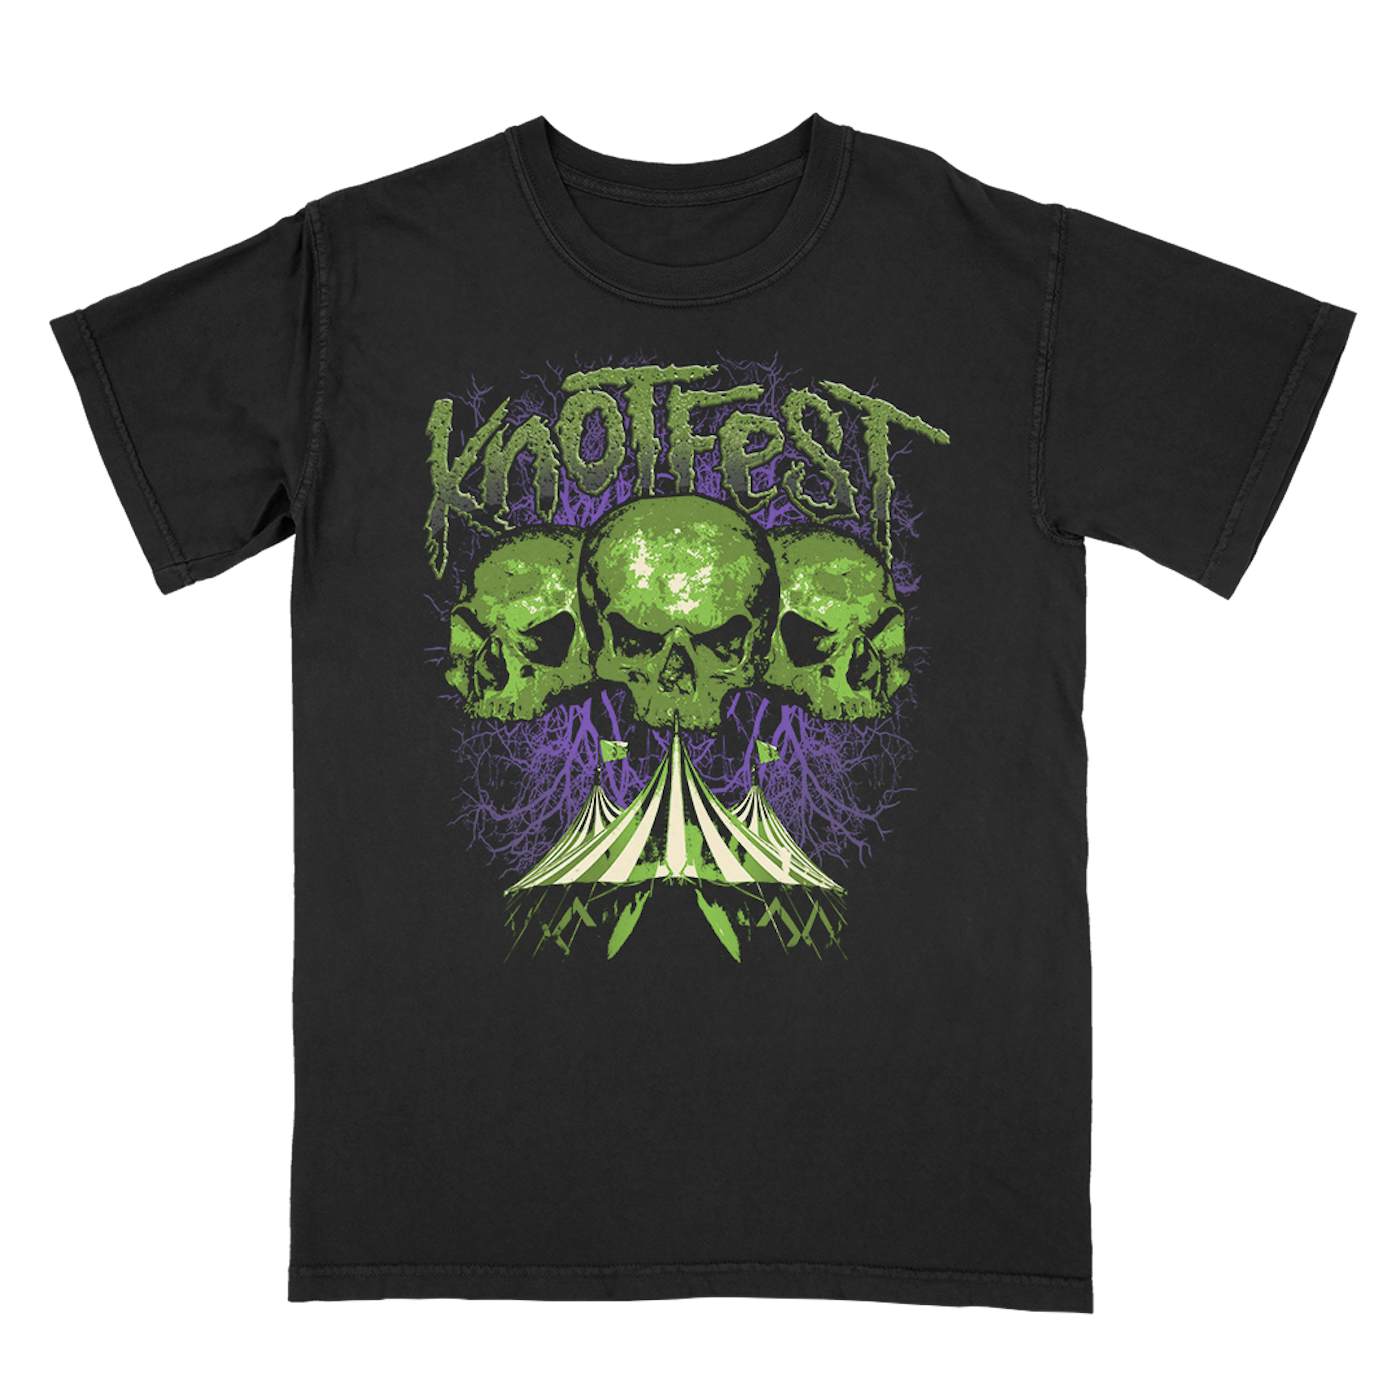 Slipknot Knotfest "3 Skulls Tent" 2022 Event T-Shirt